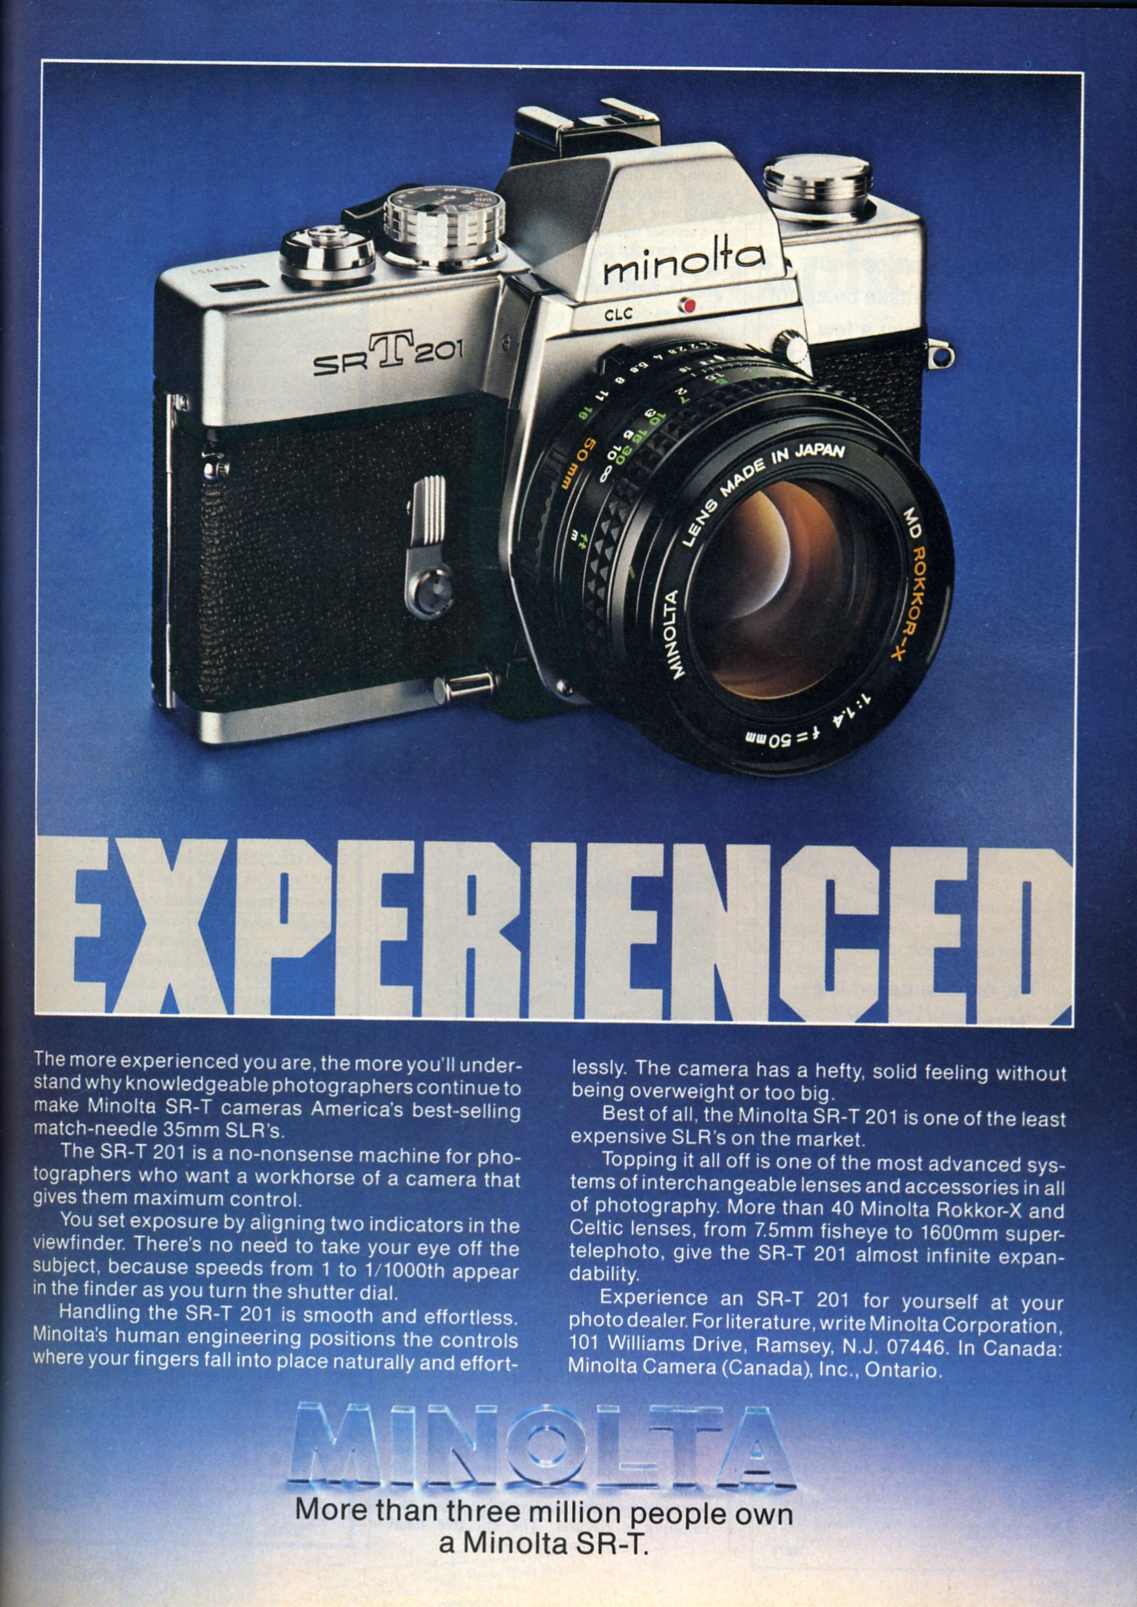 a camera advertises the camera's manual